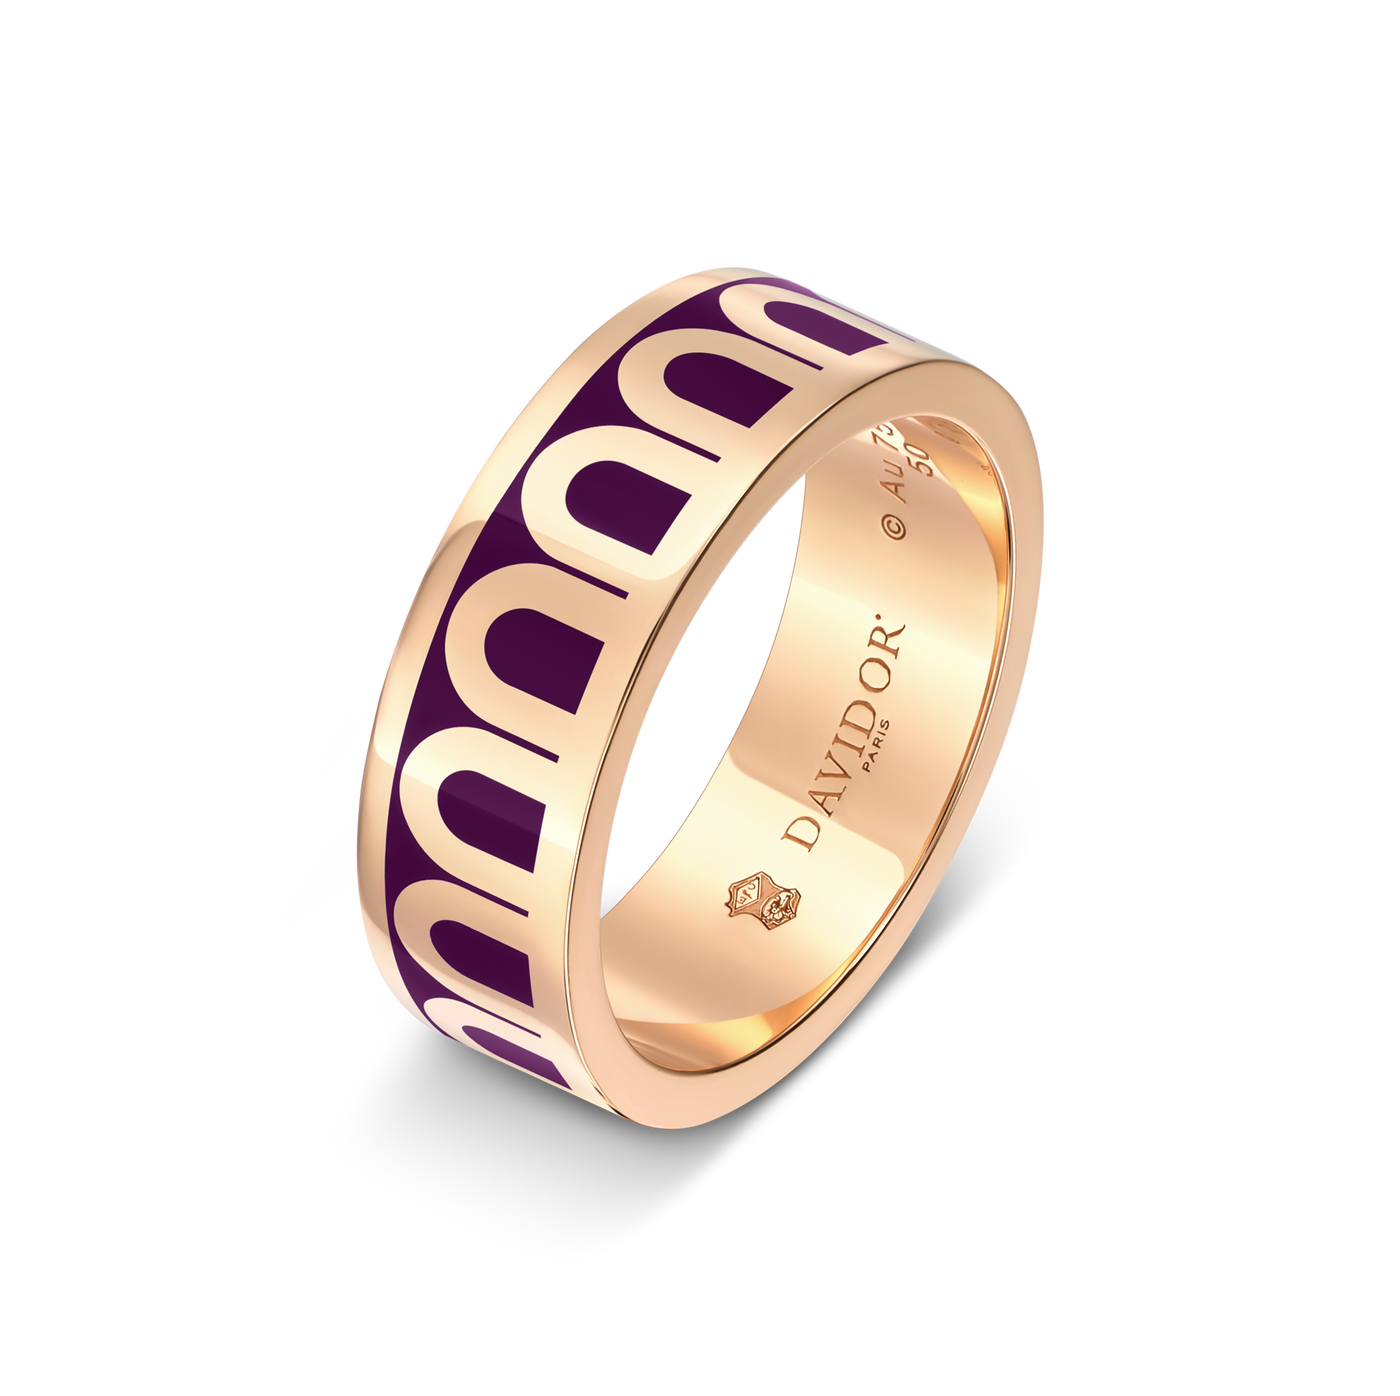 L'Arc de DAVIDOR Ring MM, 18k Rose Gold with Aubergine Lacquered Ceramic - DAVIDOR